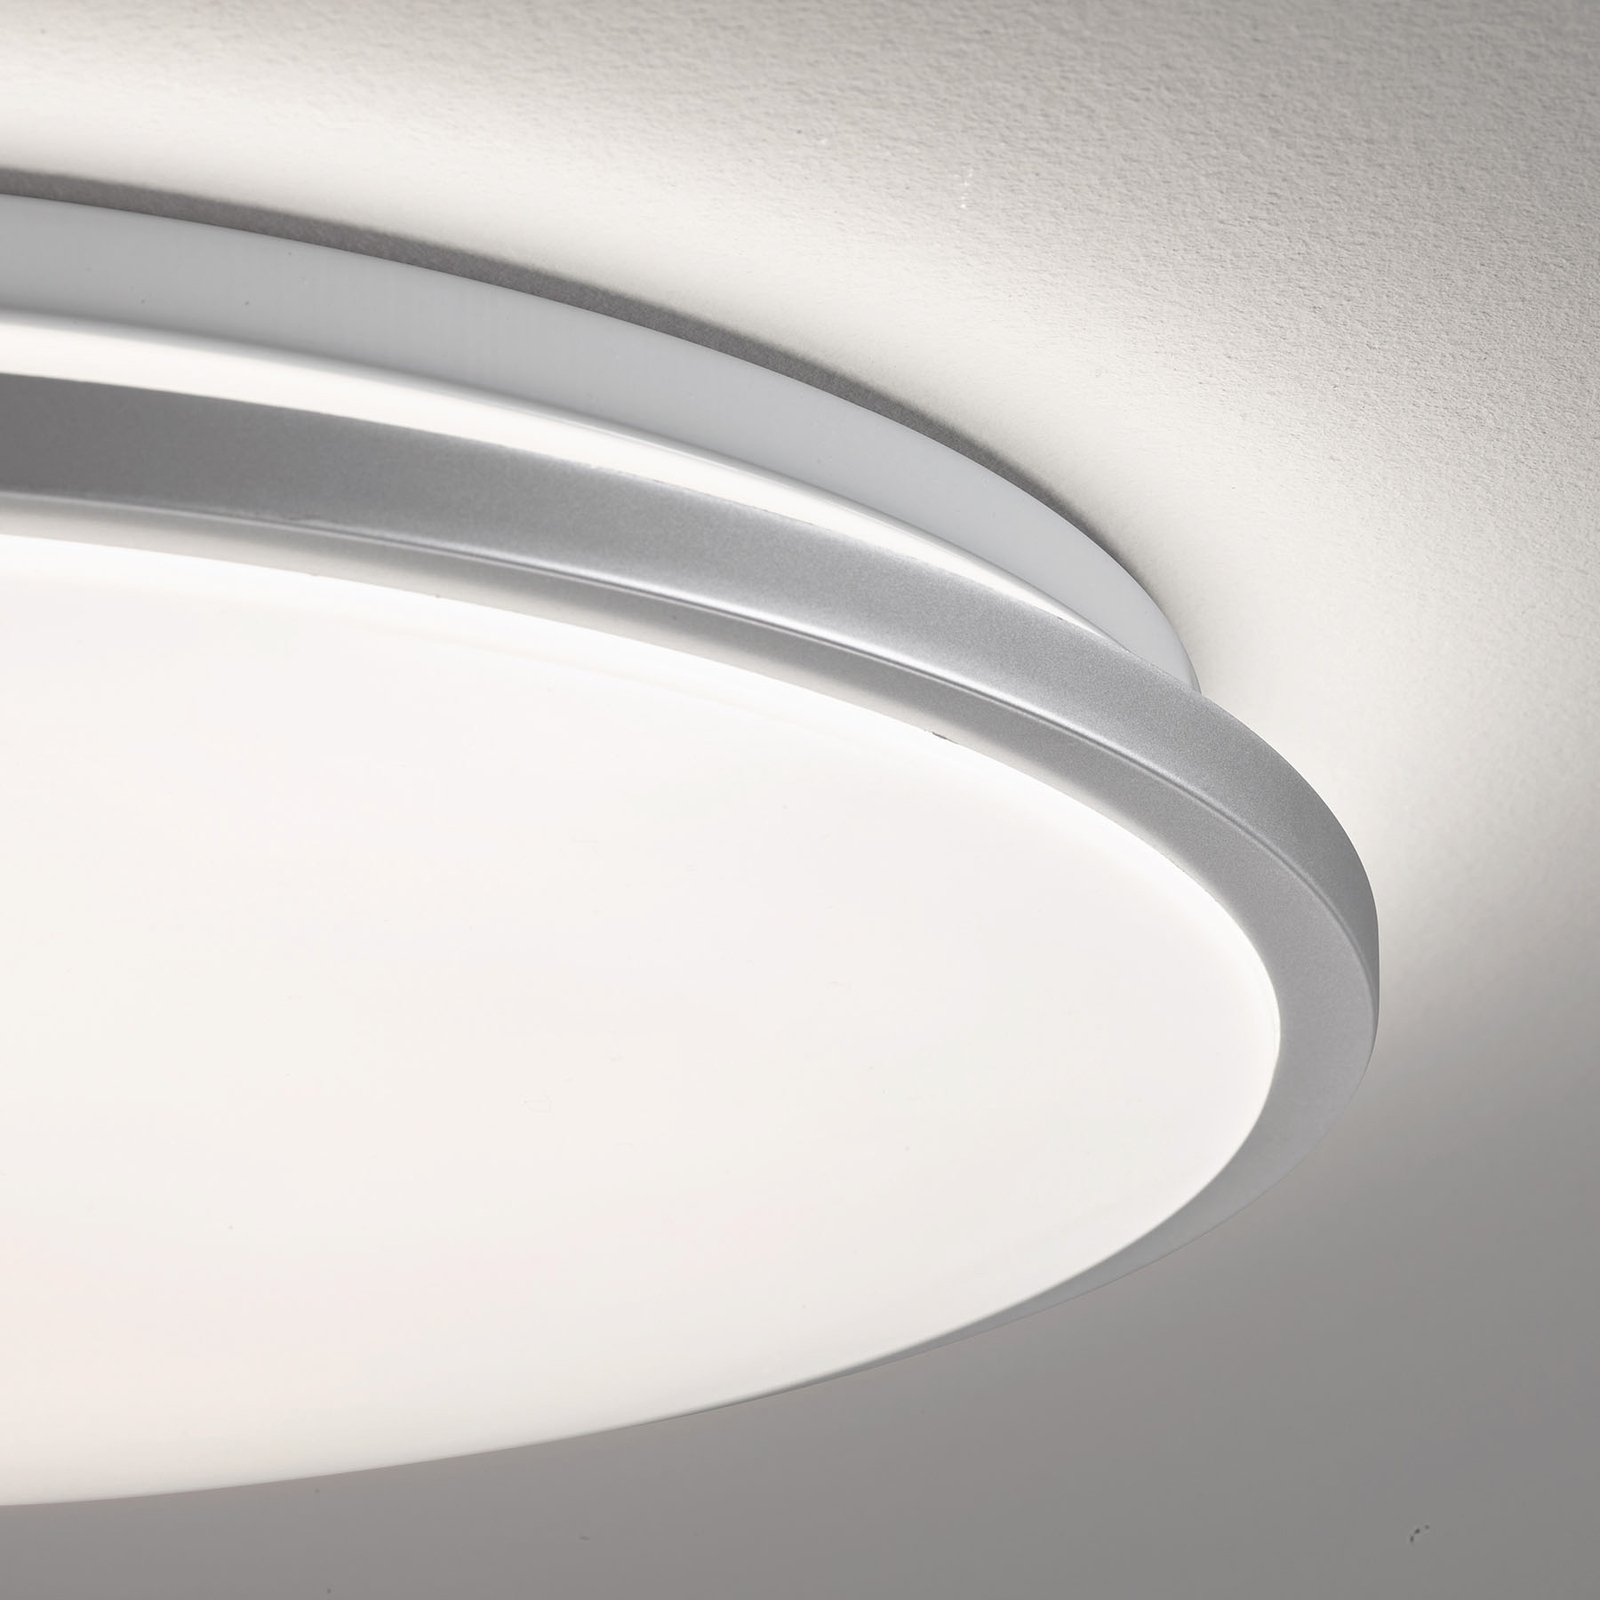 Jaso LED ceiling light, dimmable, Ø 40 cm, silver